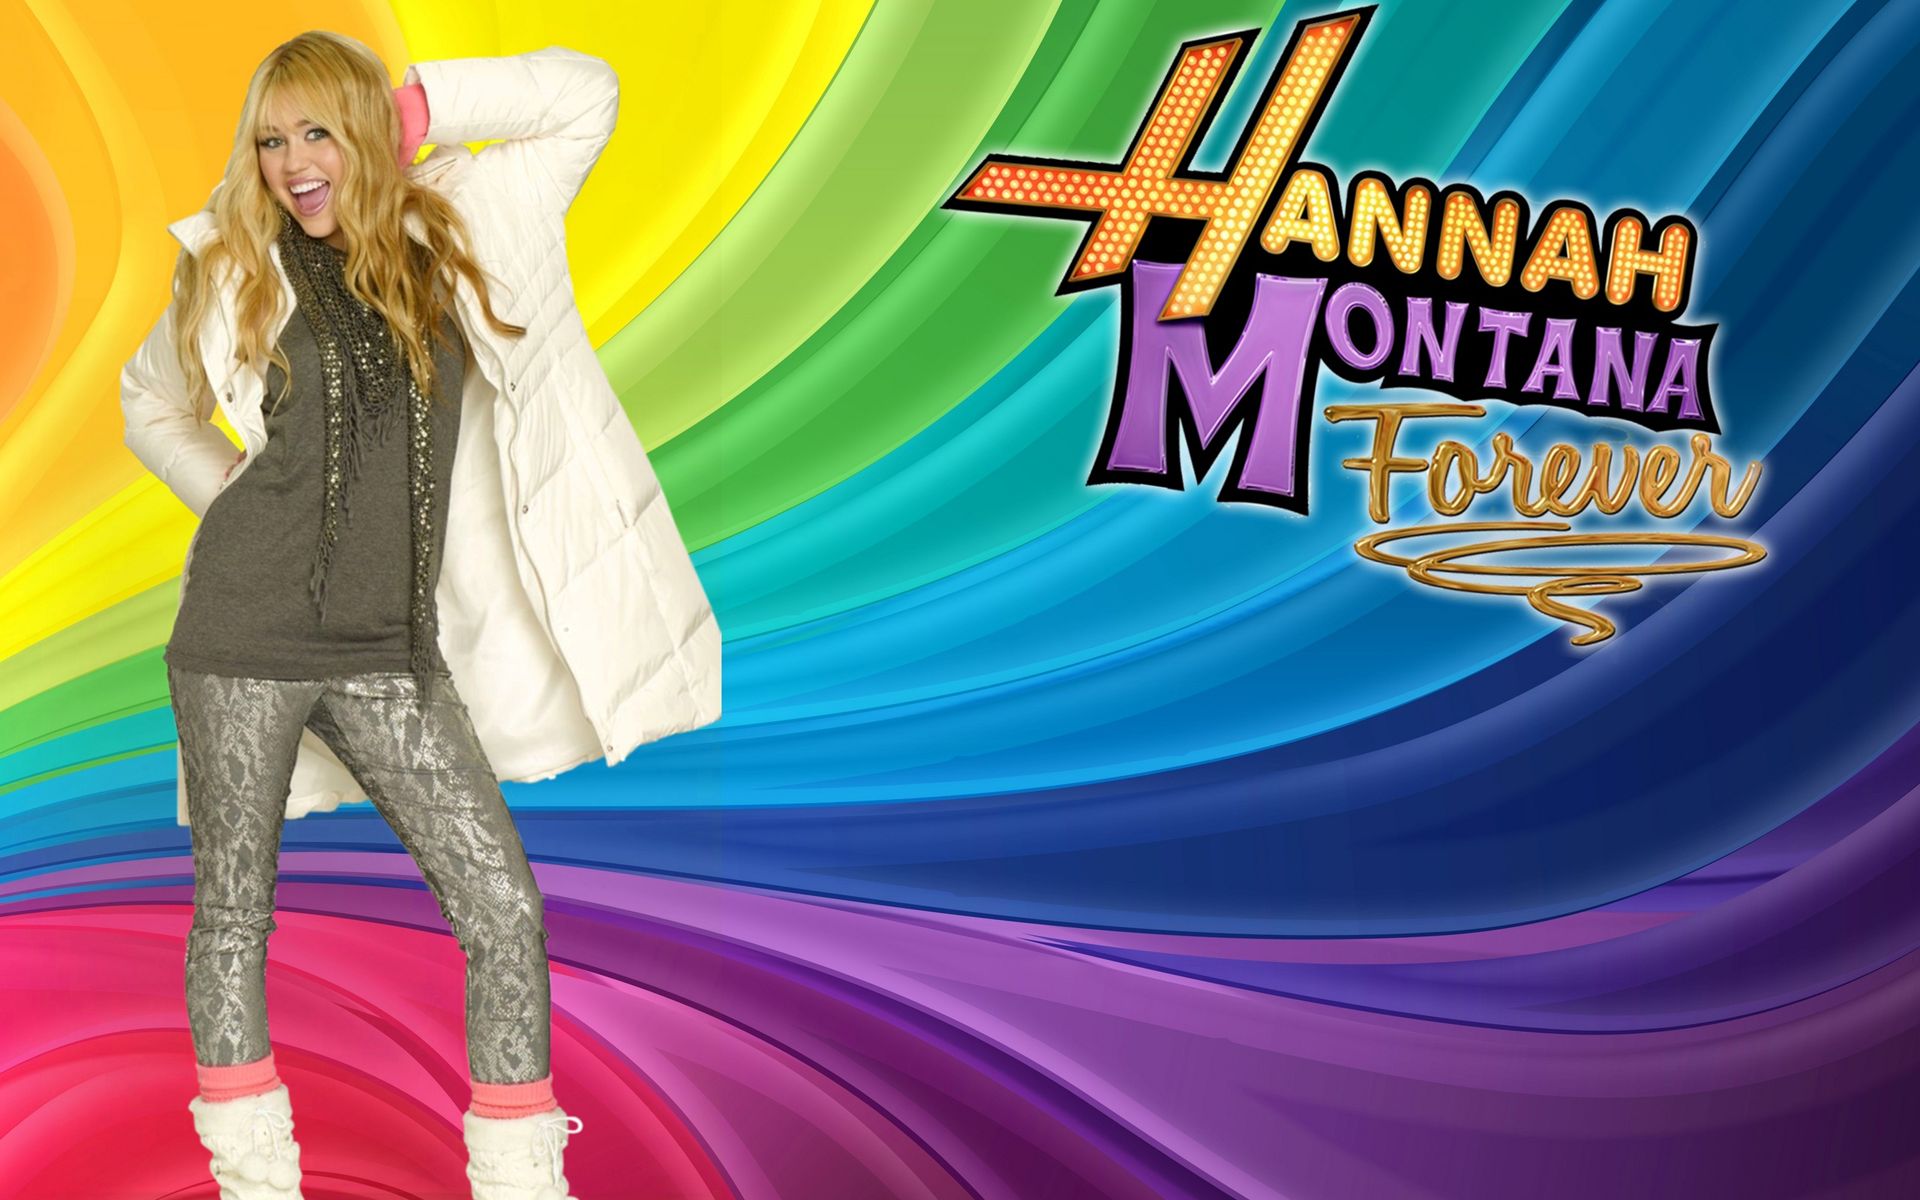 Wallpaper Mosaic Free HD Hannah Montana Forever 1920x1200